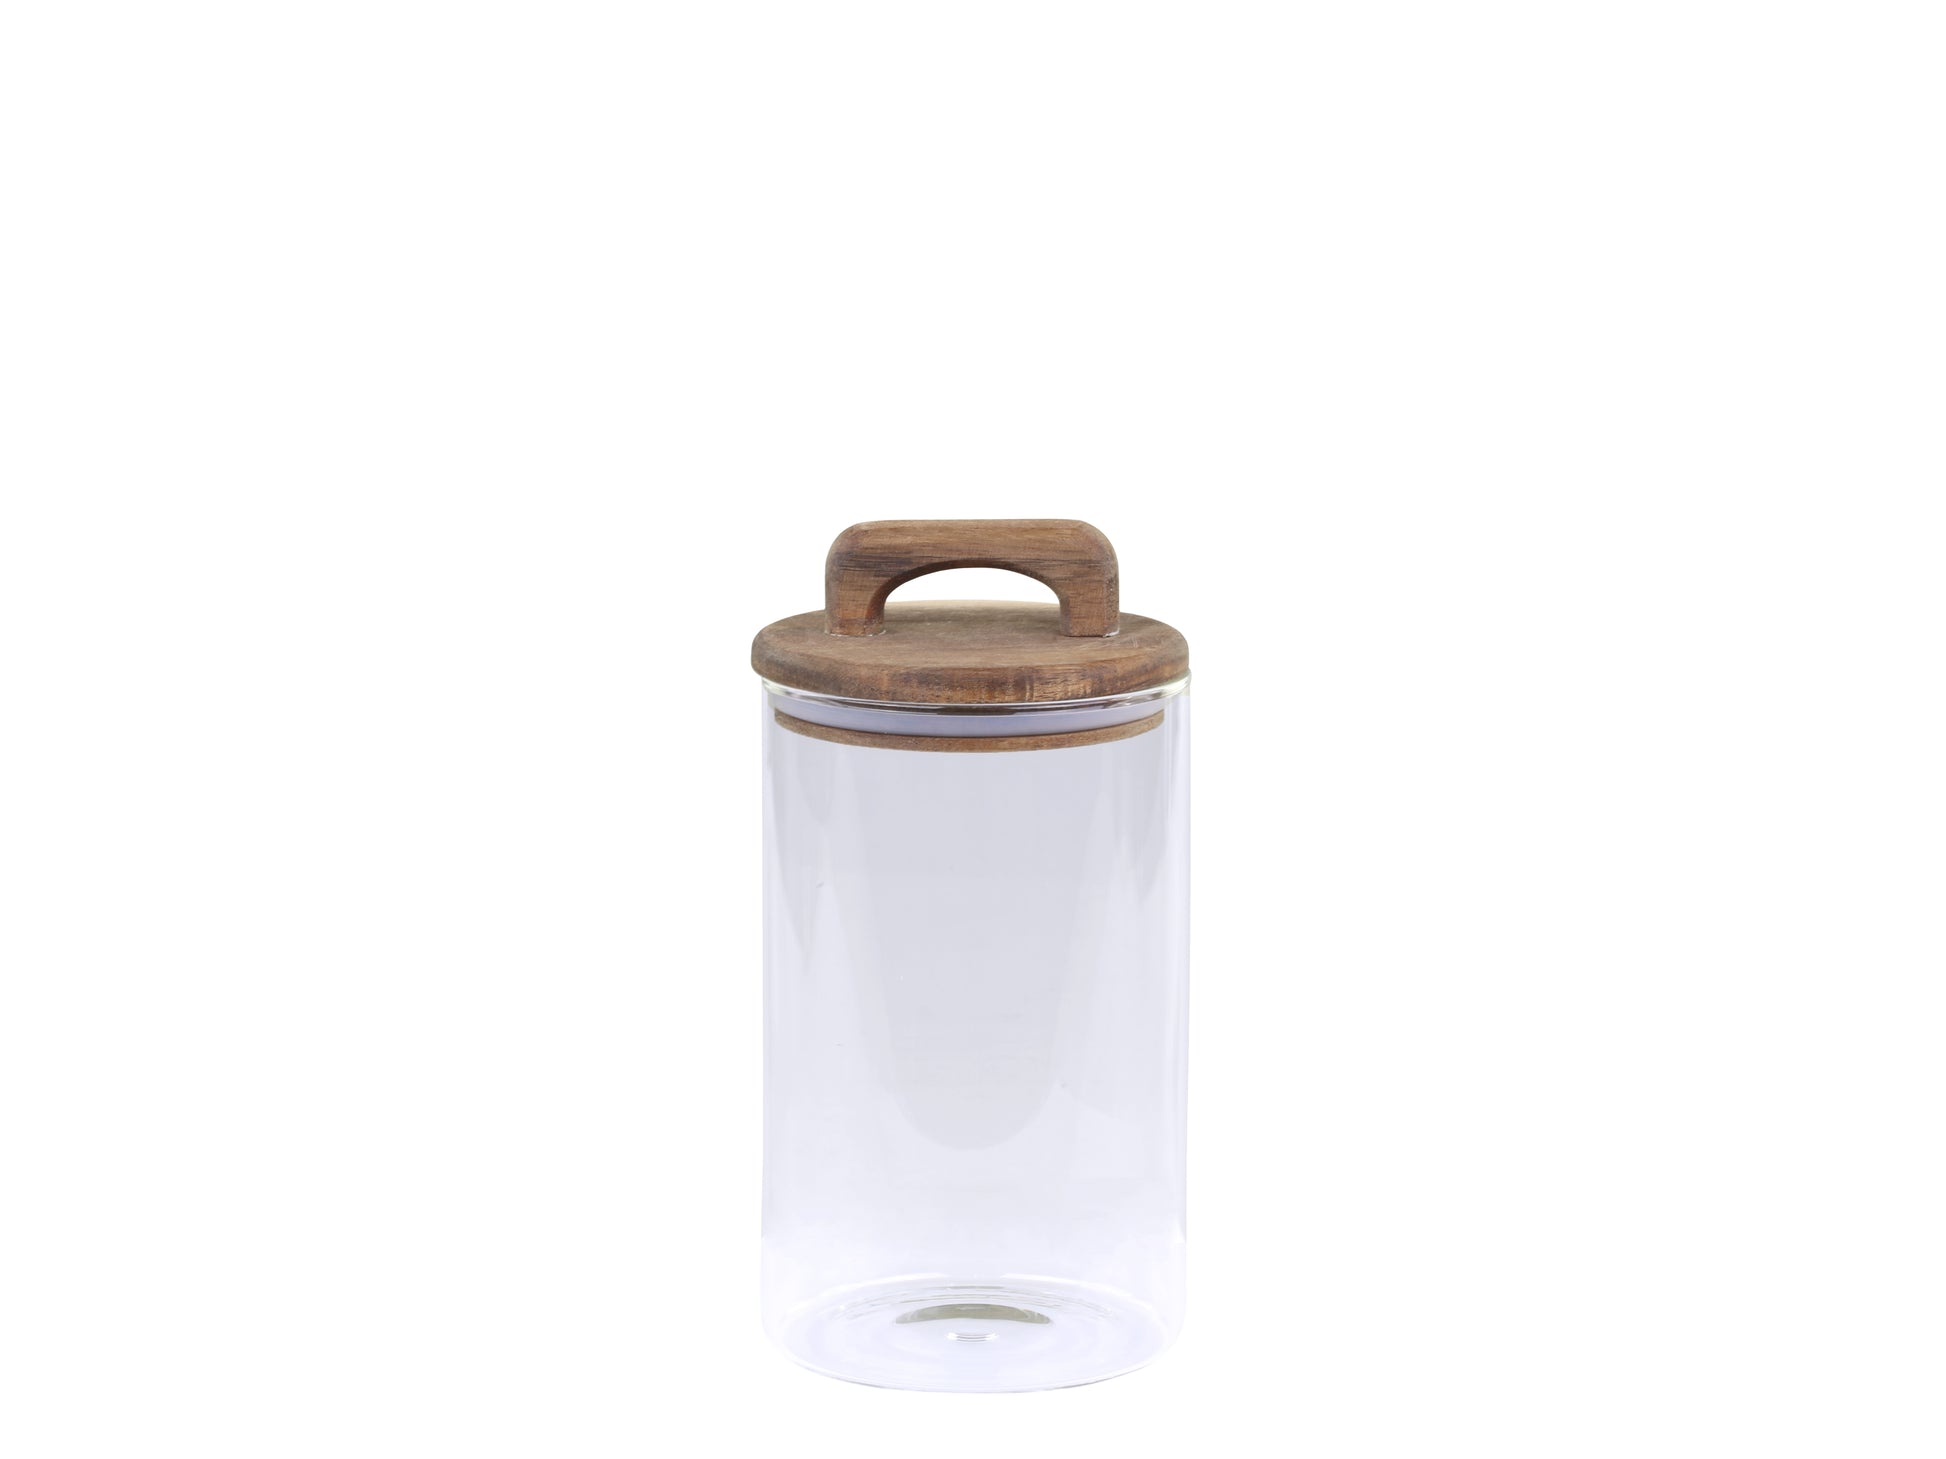 Generosa Storage jar with Wooden Lid H19cm